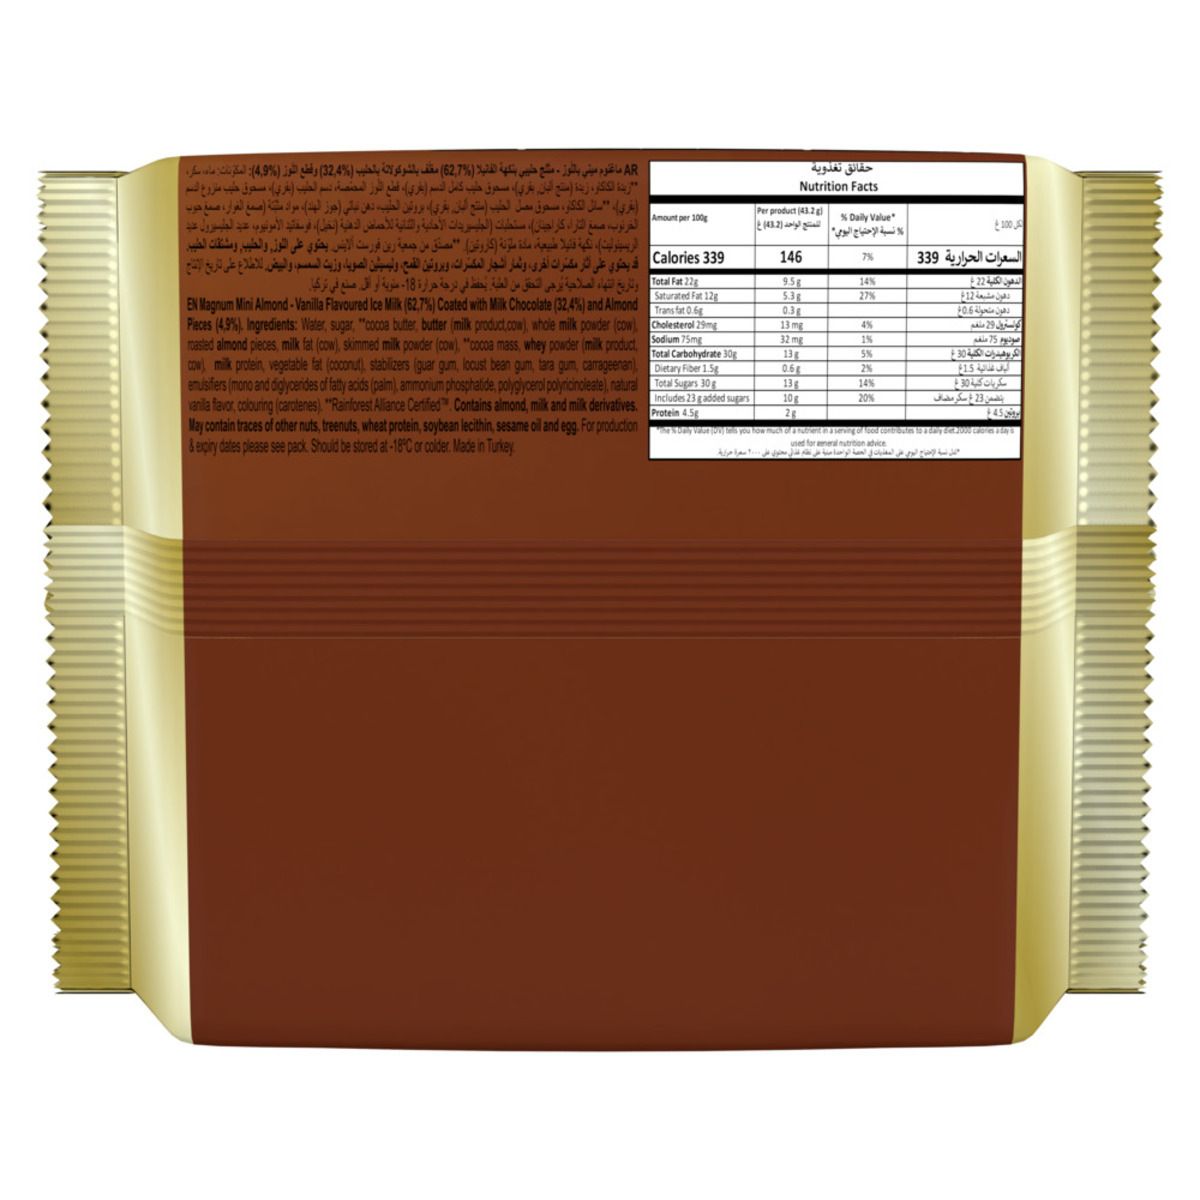 ماجنوم ميني آيس كريم باللوز 6 × 57.5 مل